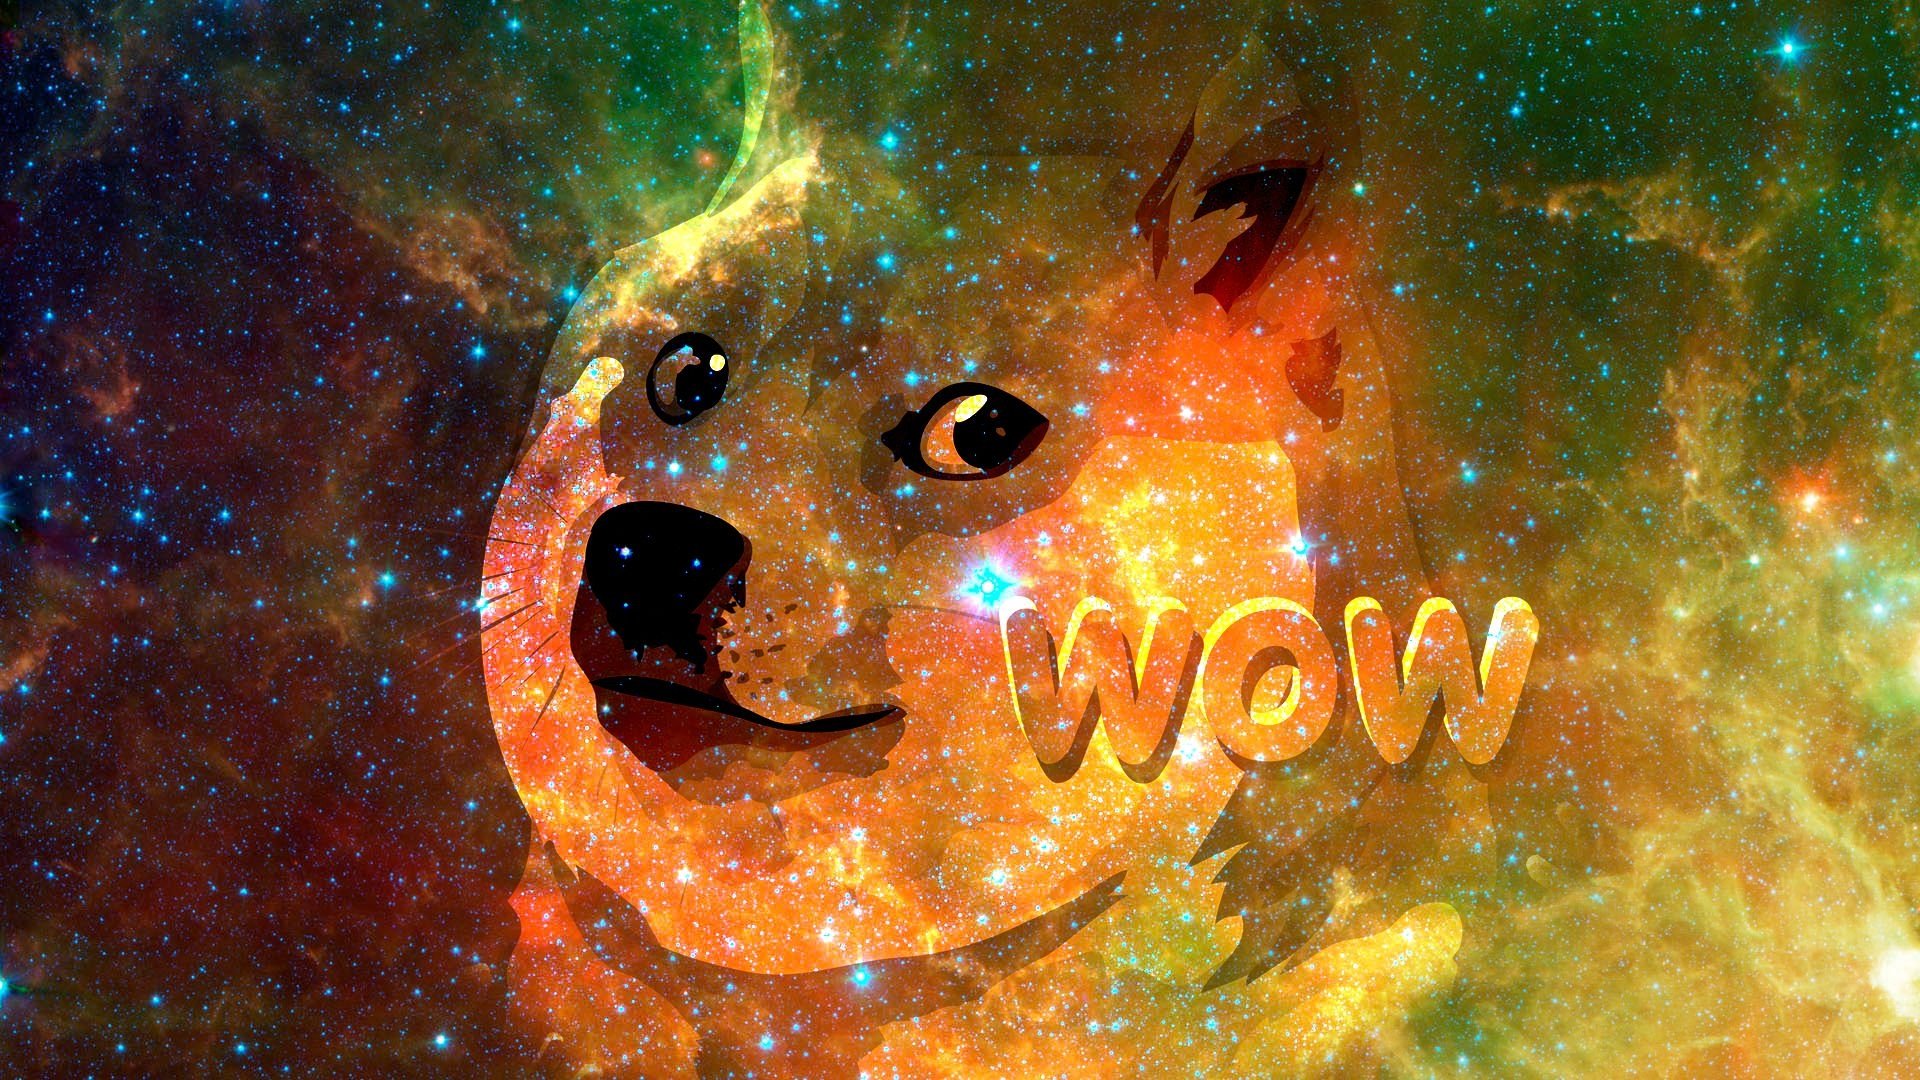 Doge Meme Wallpaper Quality Images iPhoto Pick